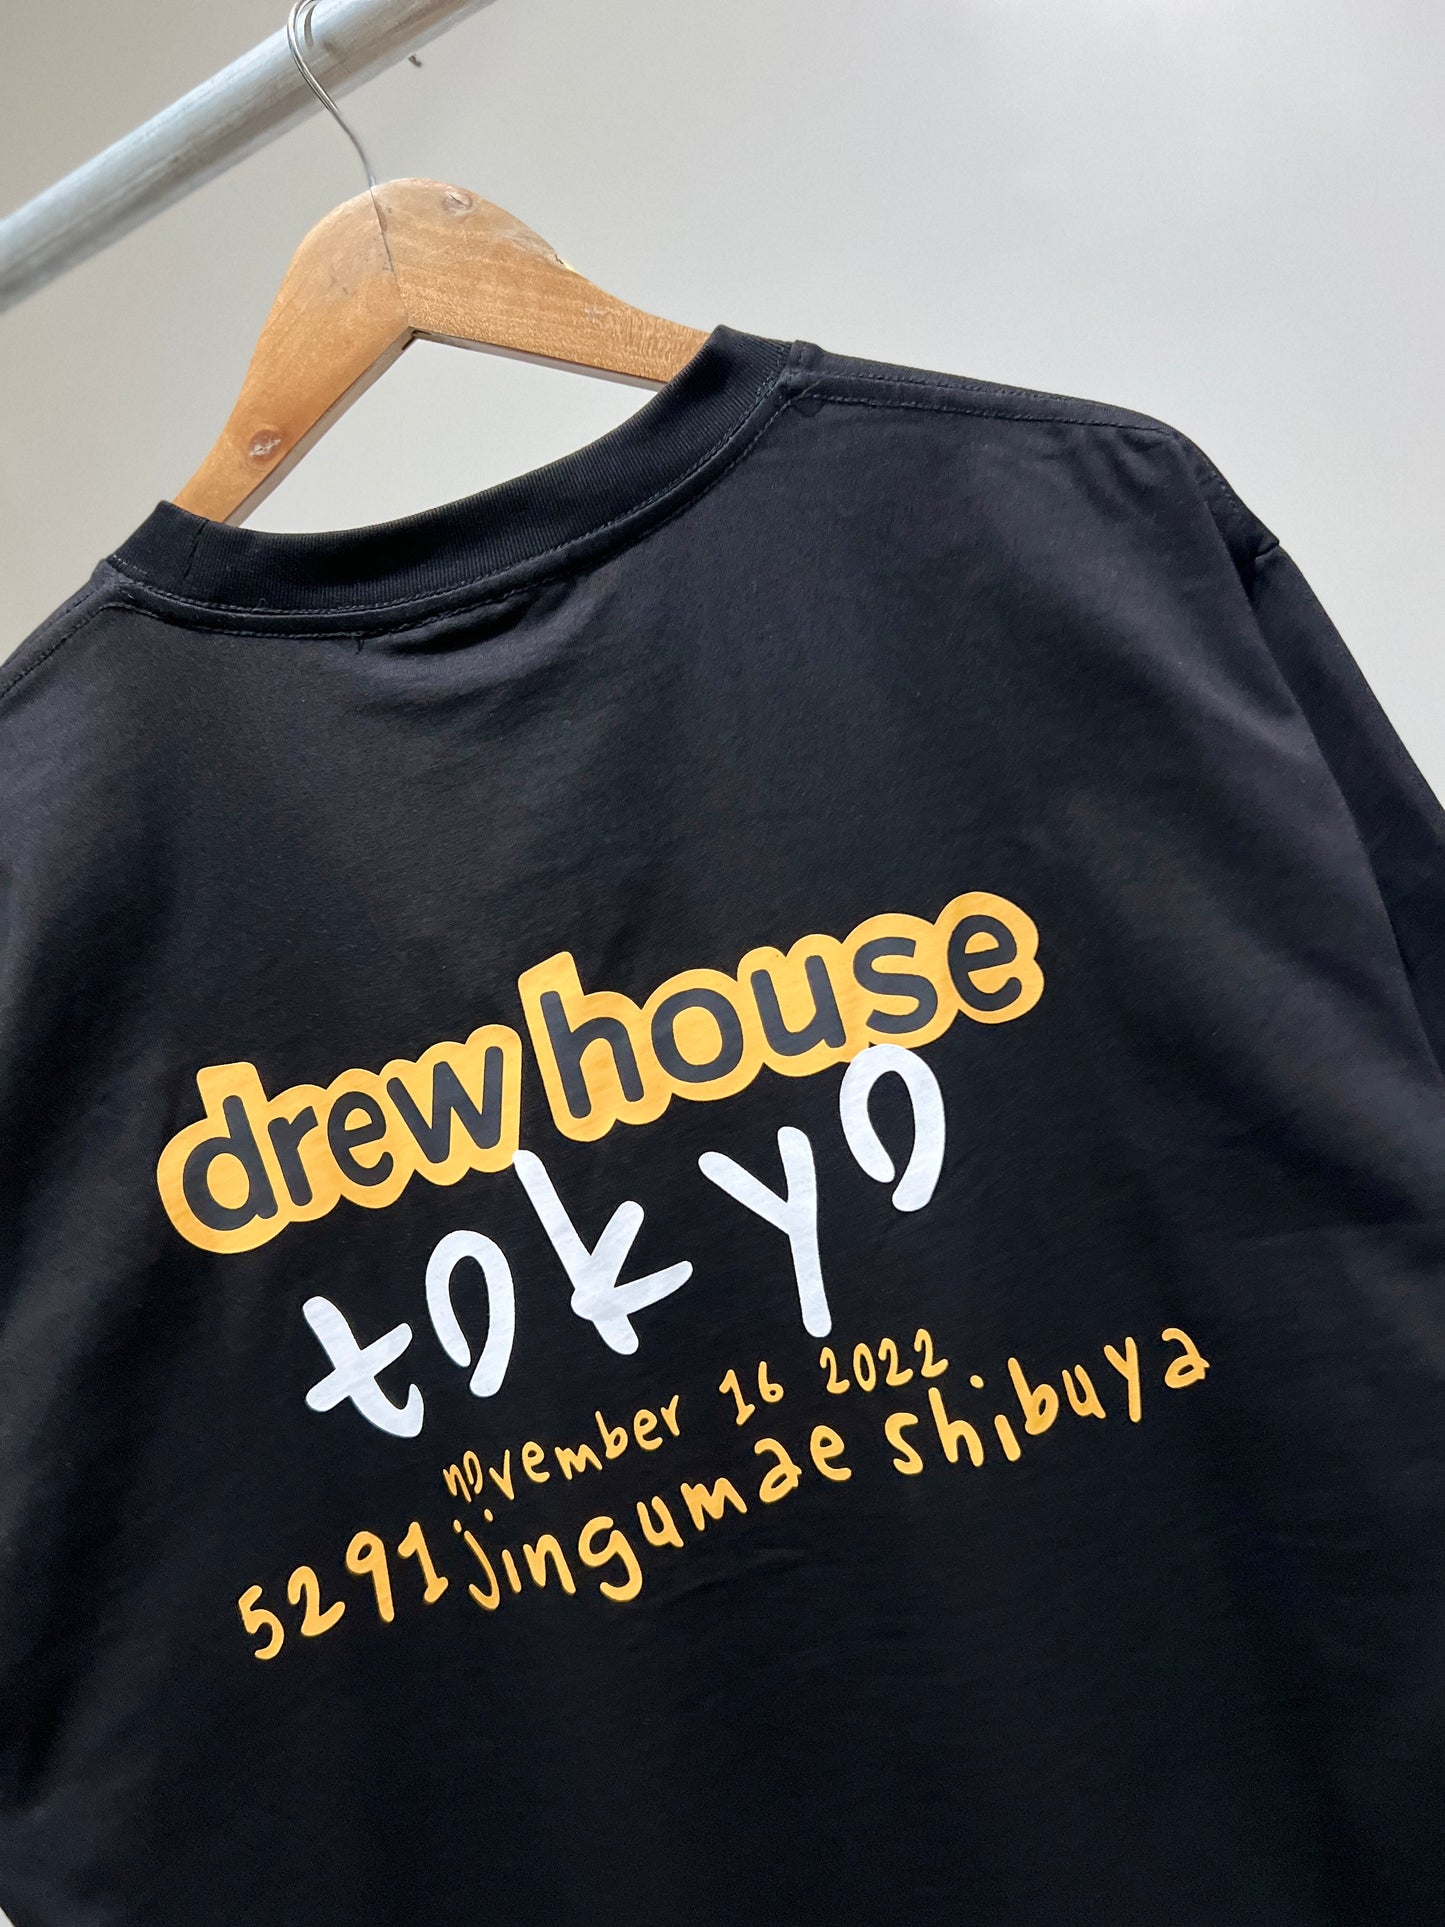 Drew House "Tokyo" Tee